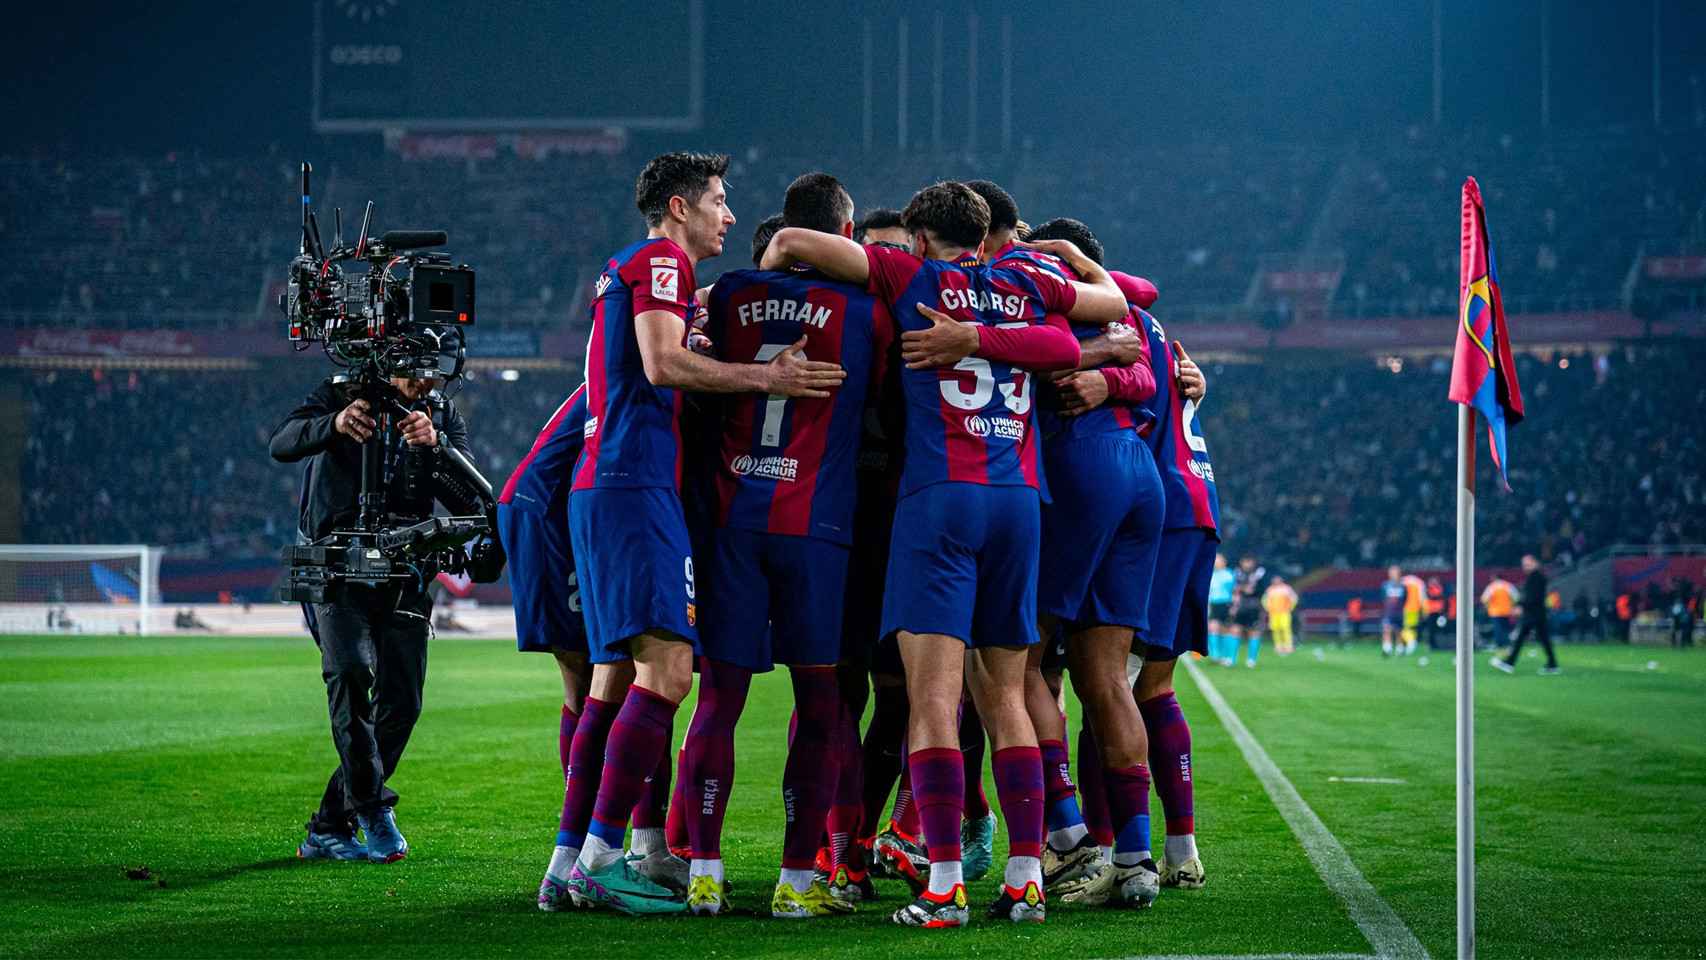 La cámara sigue el abrazo de los jugadores del Barça tras anotar un gol en Montjuïc